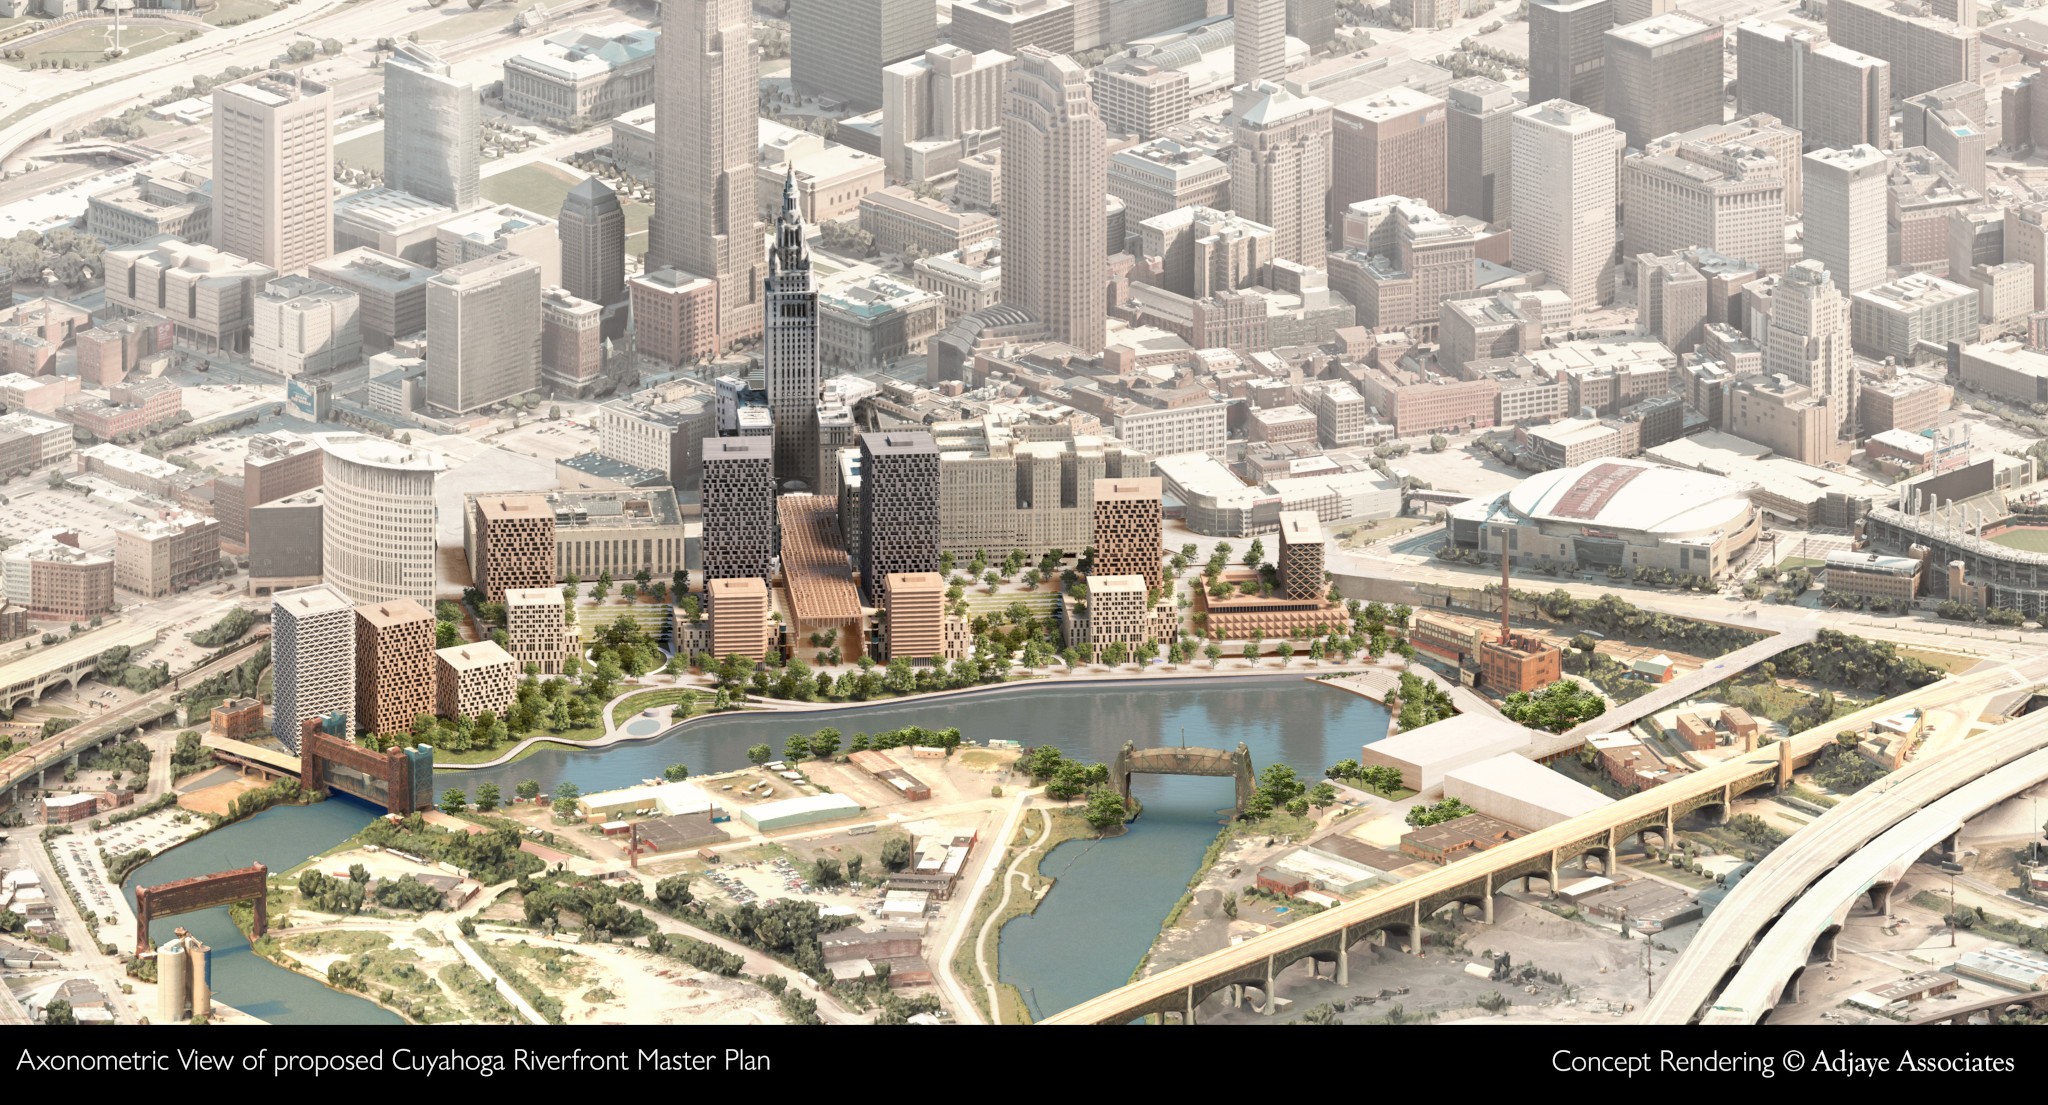 Bedrock's Updated 3.5 Billion Riverfront Plan Comes With Huge Promises